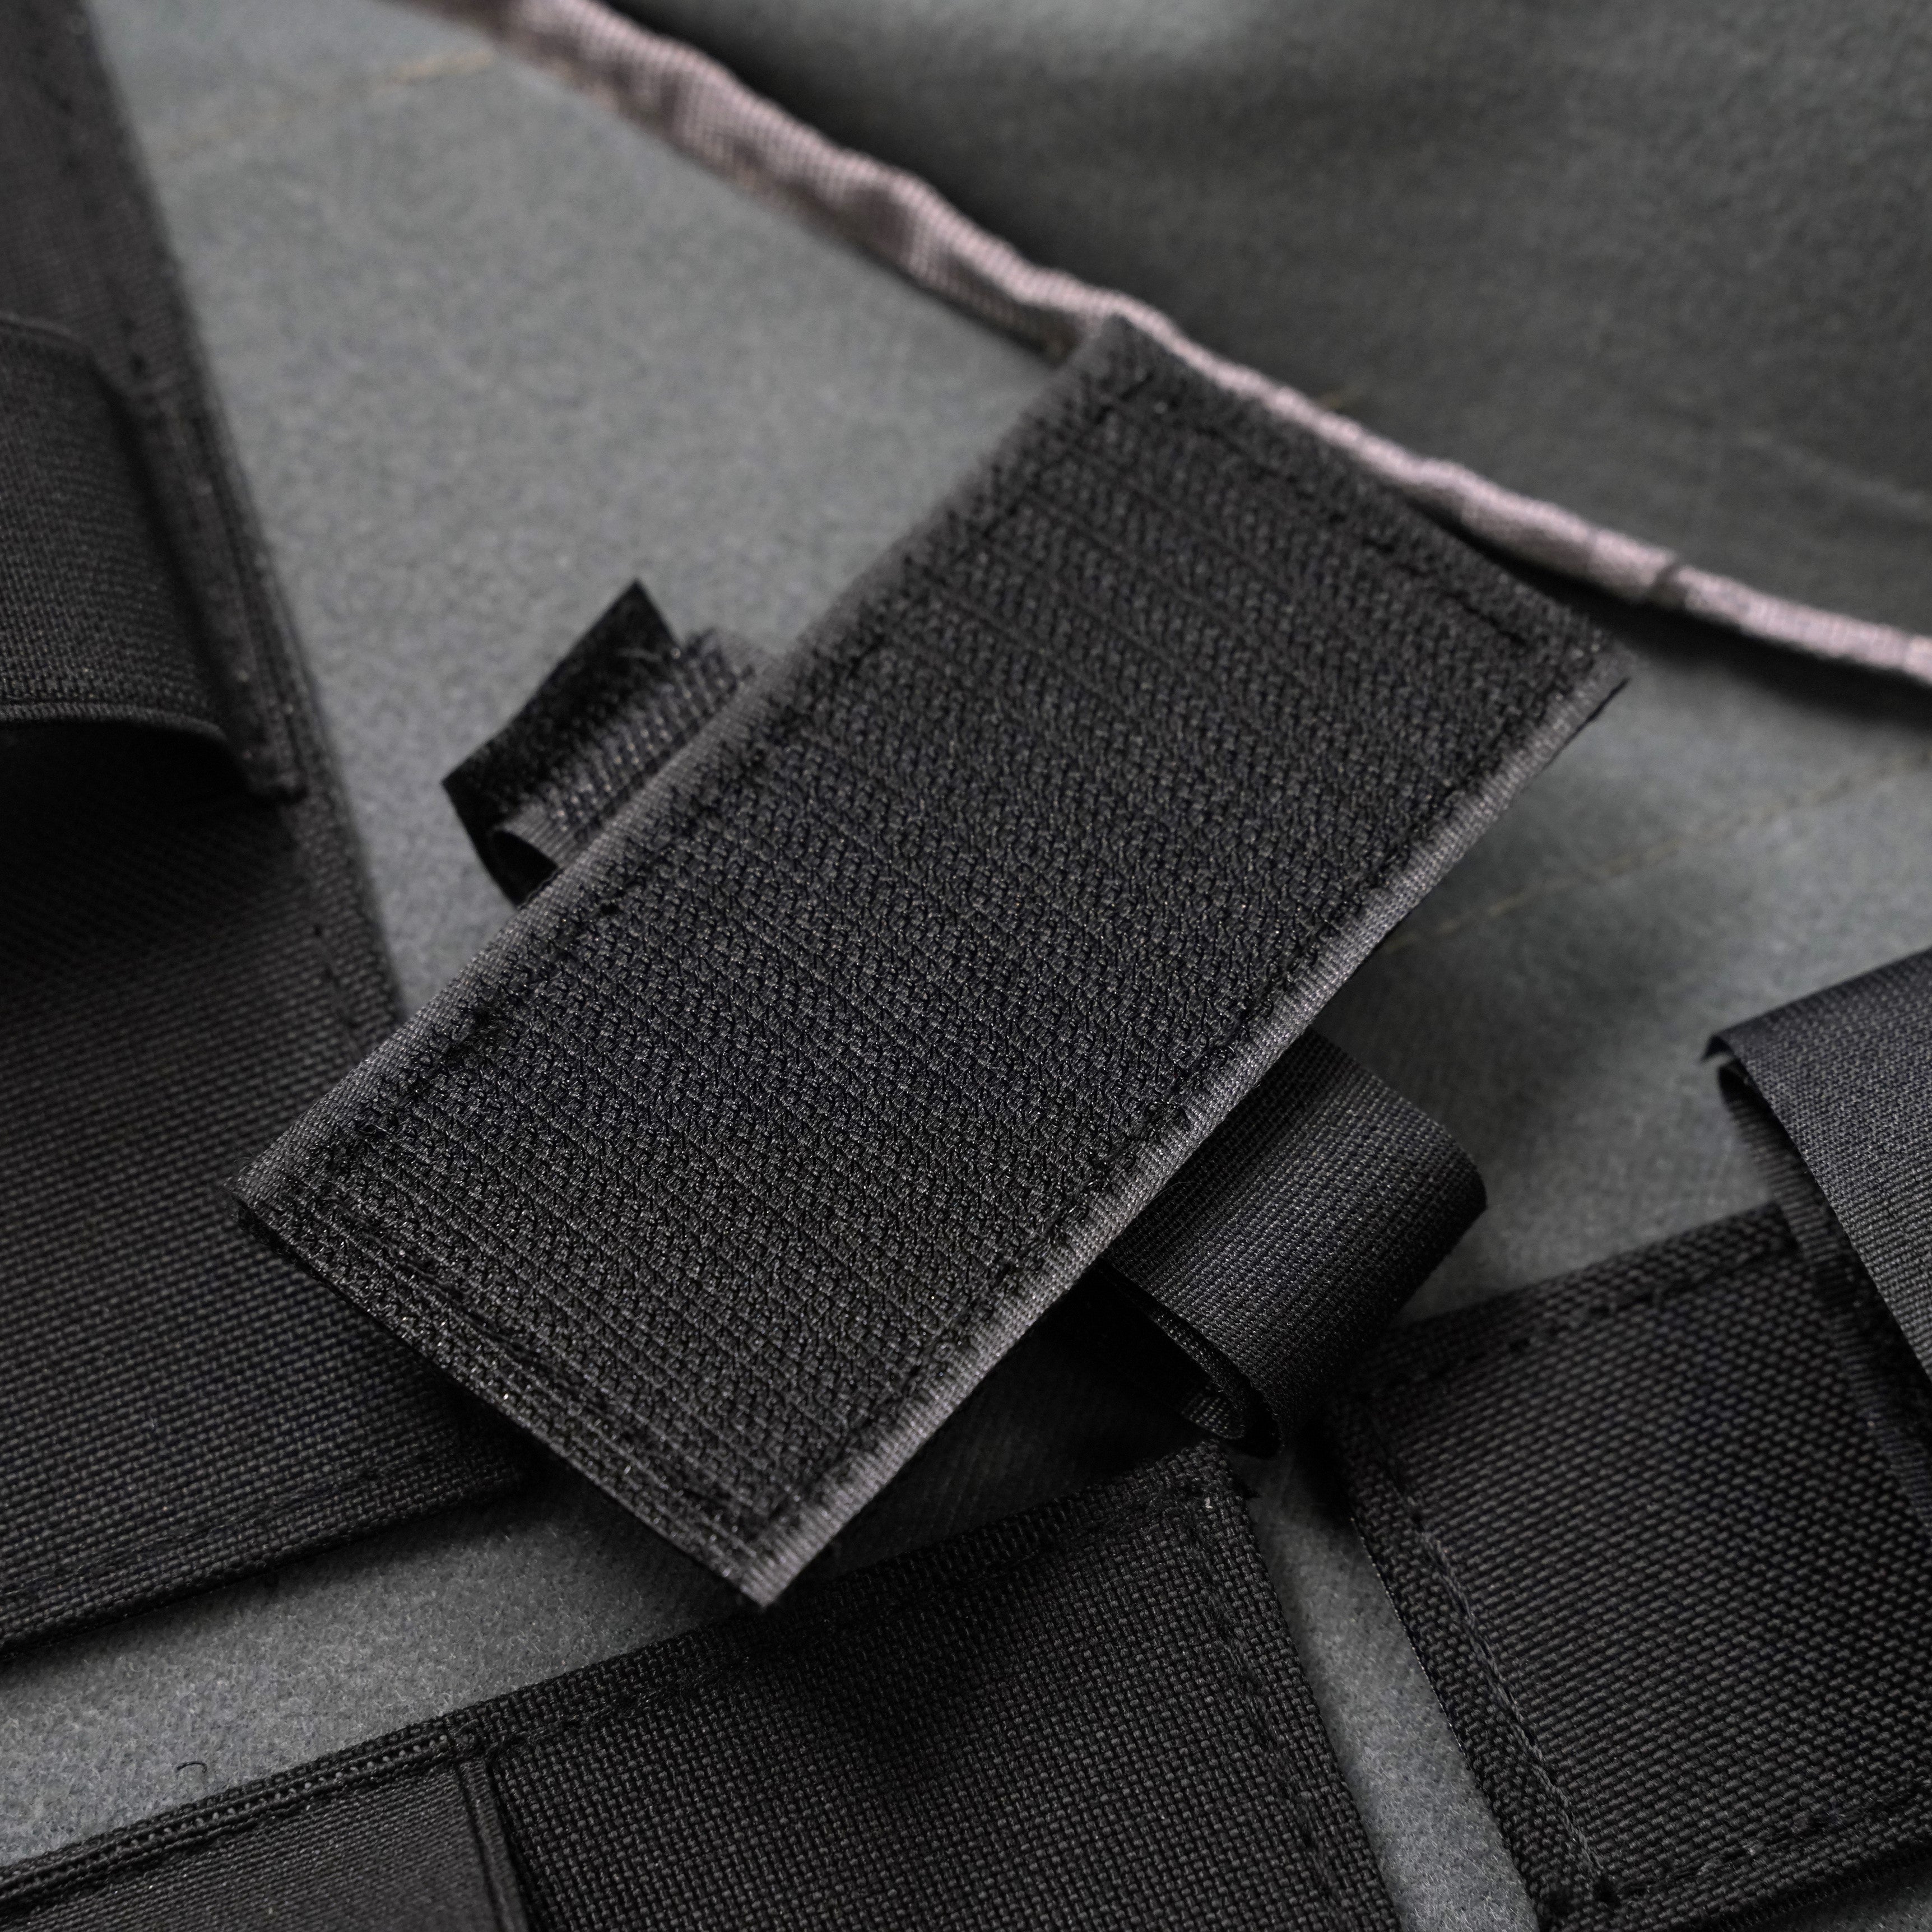 Bang Bang Custom Velcro Backed Elastic Tie-down (4pcs Pack)